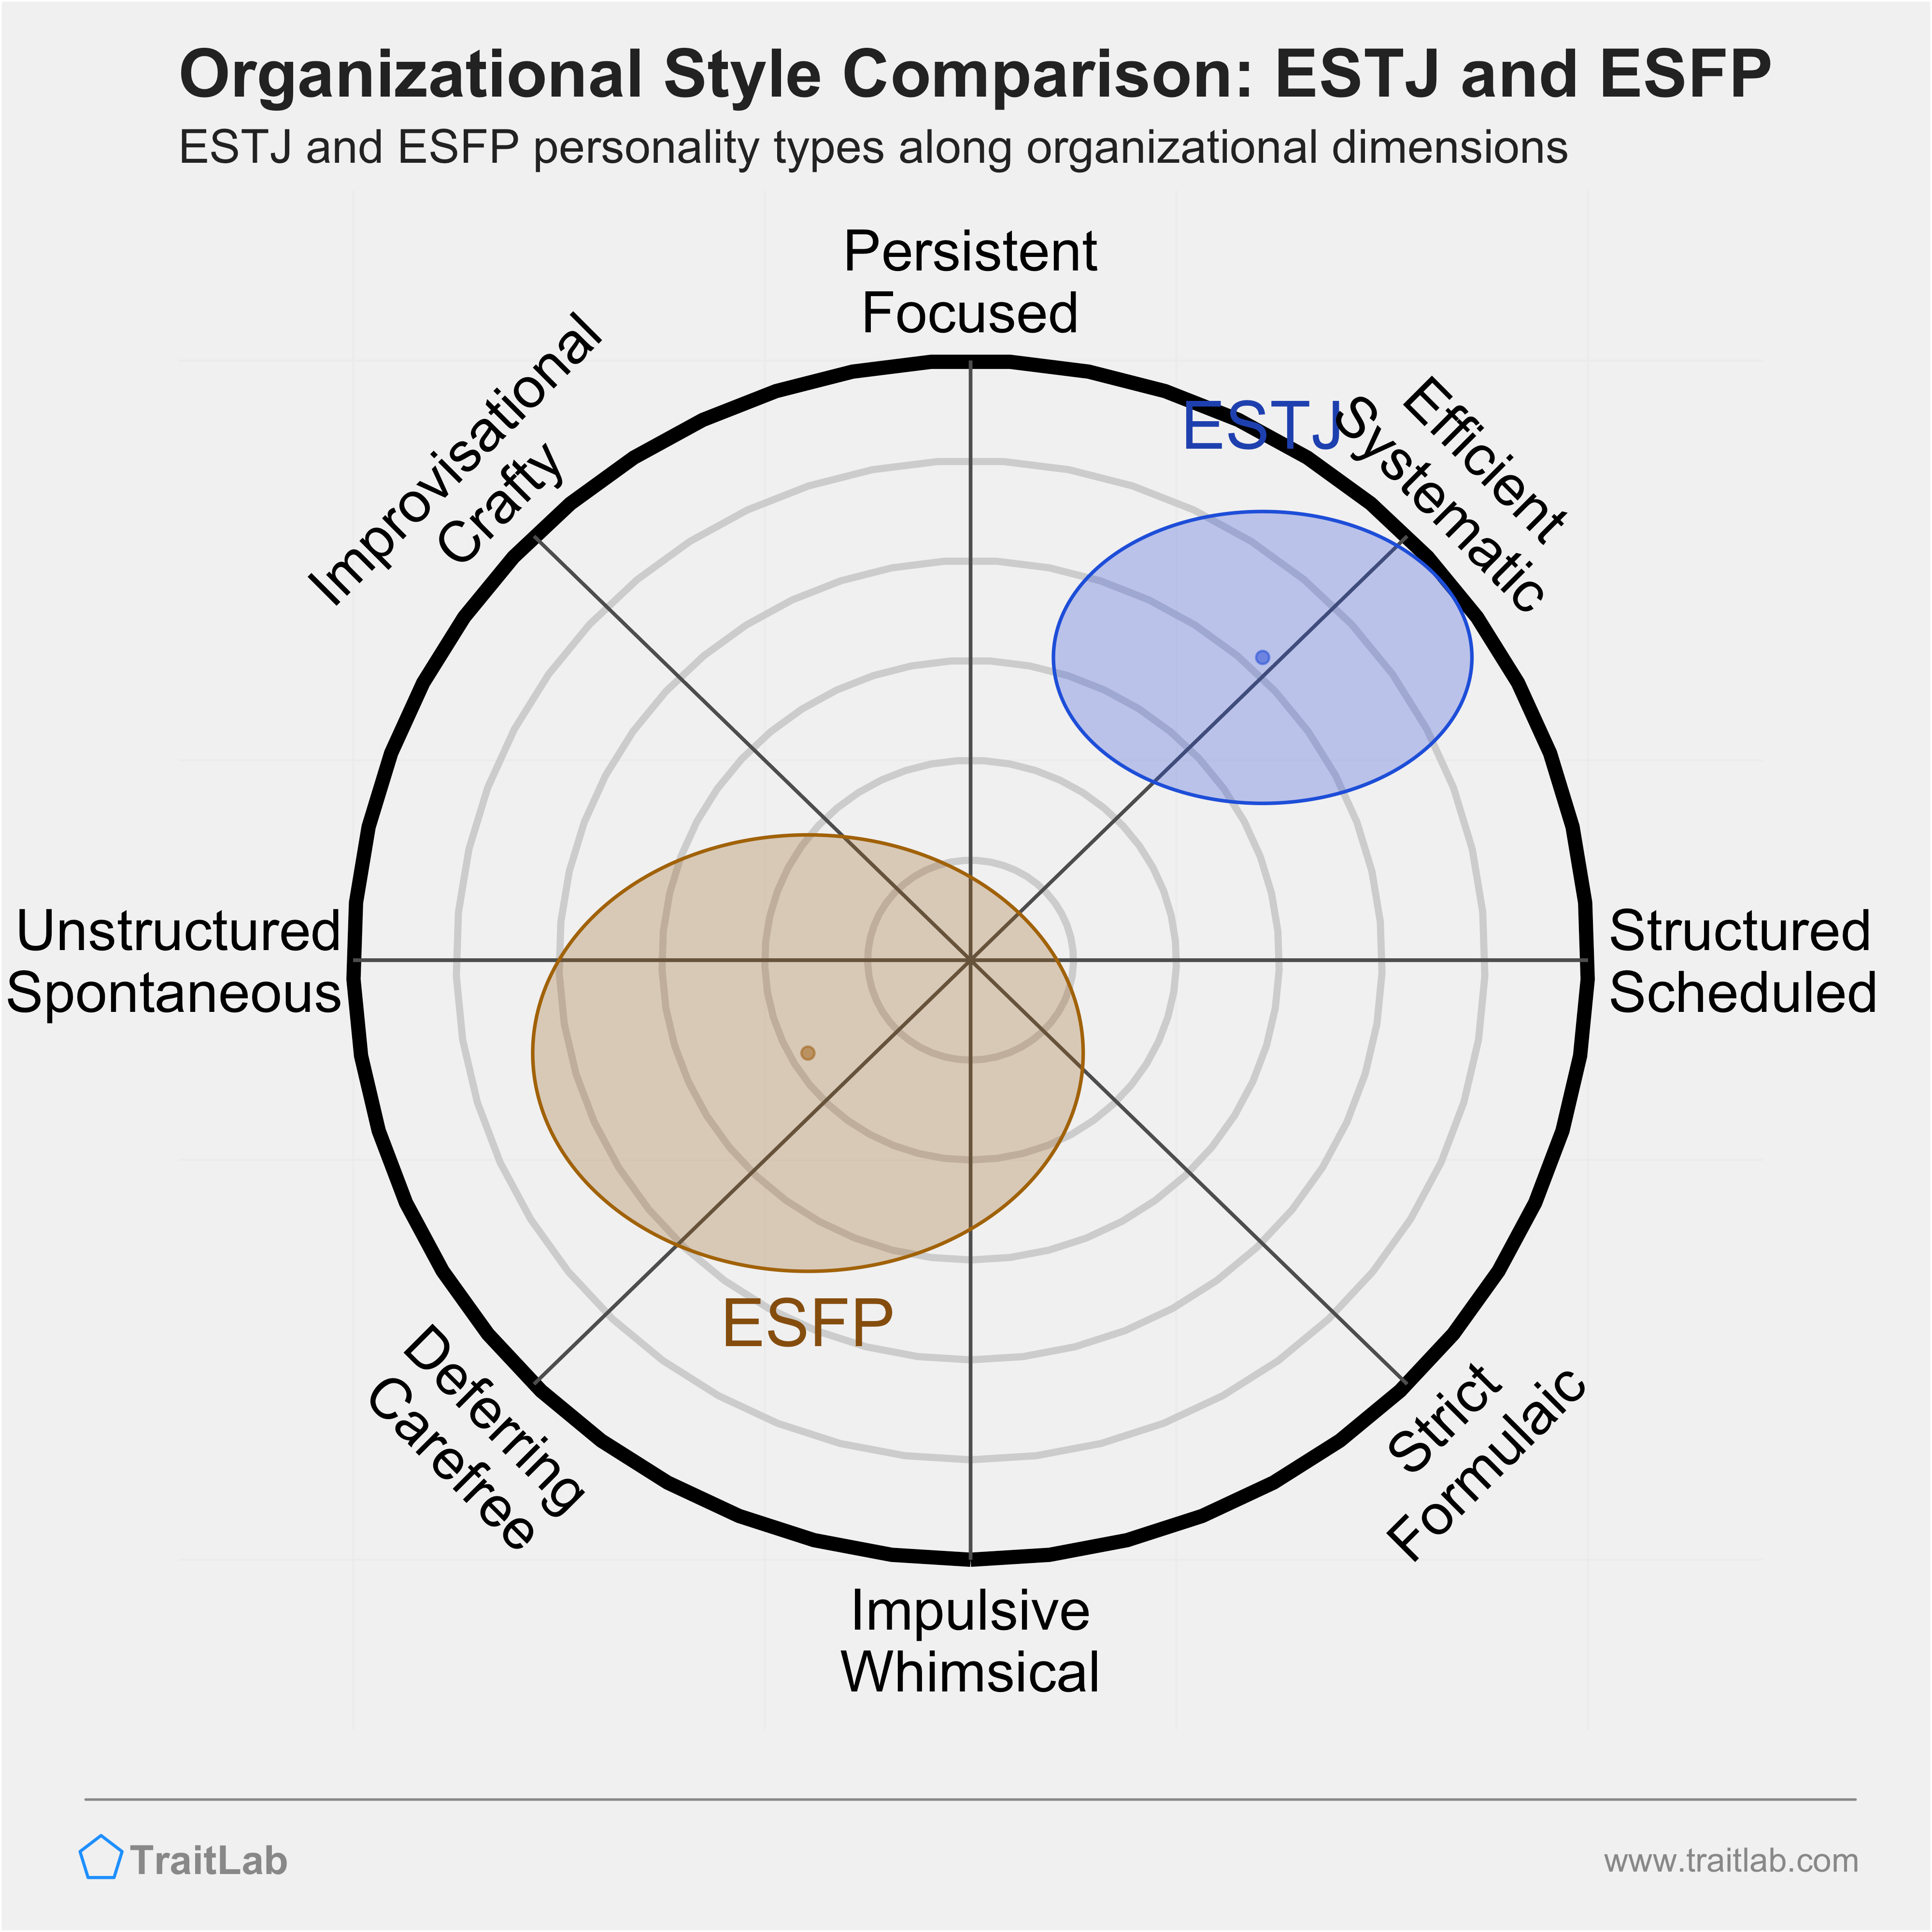 ESTJ and ESFP comparison across organizational dimensions